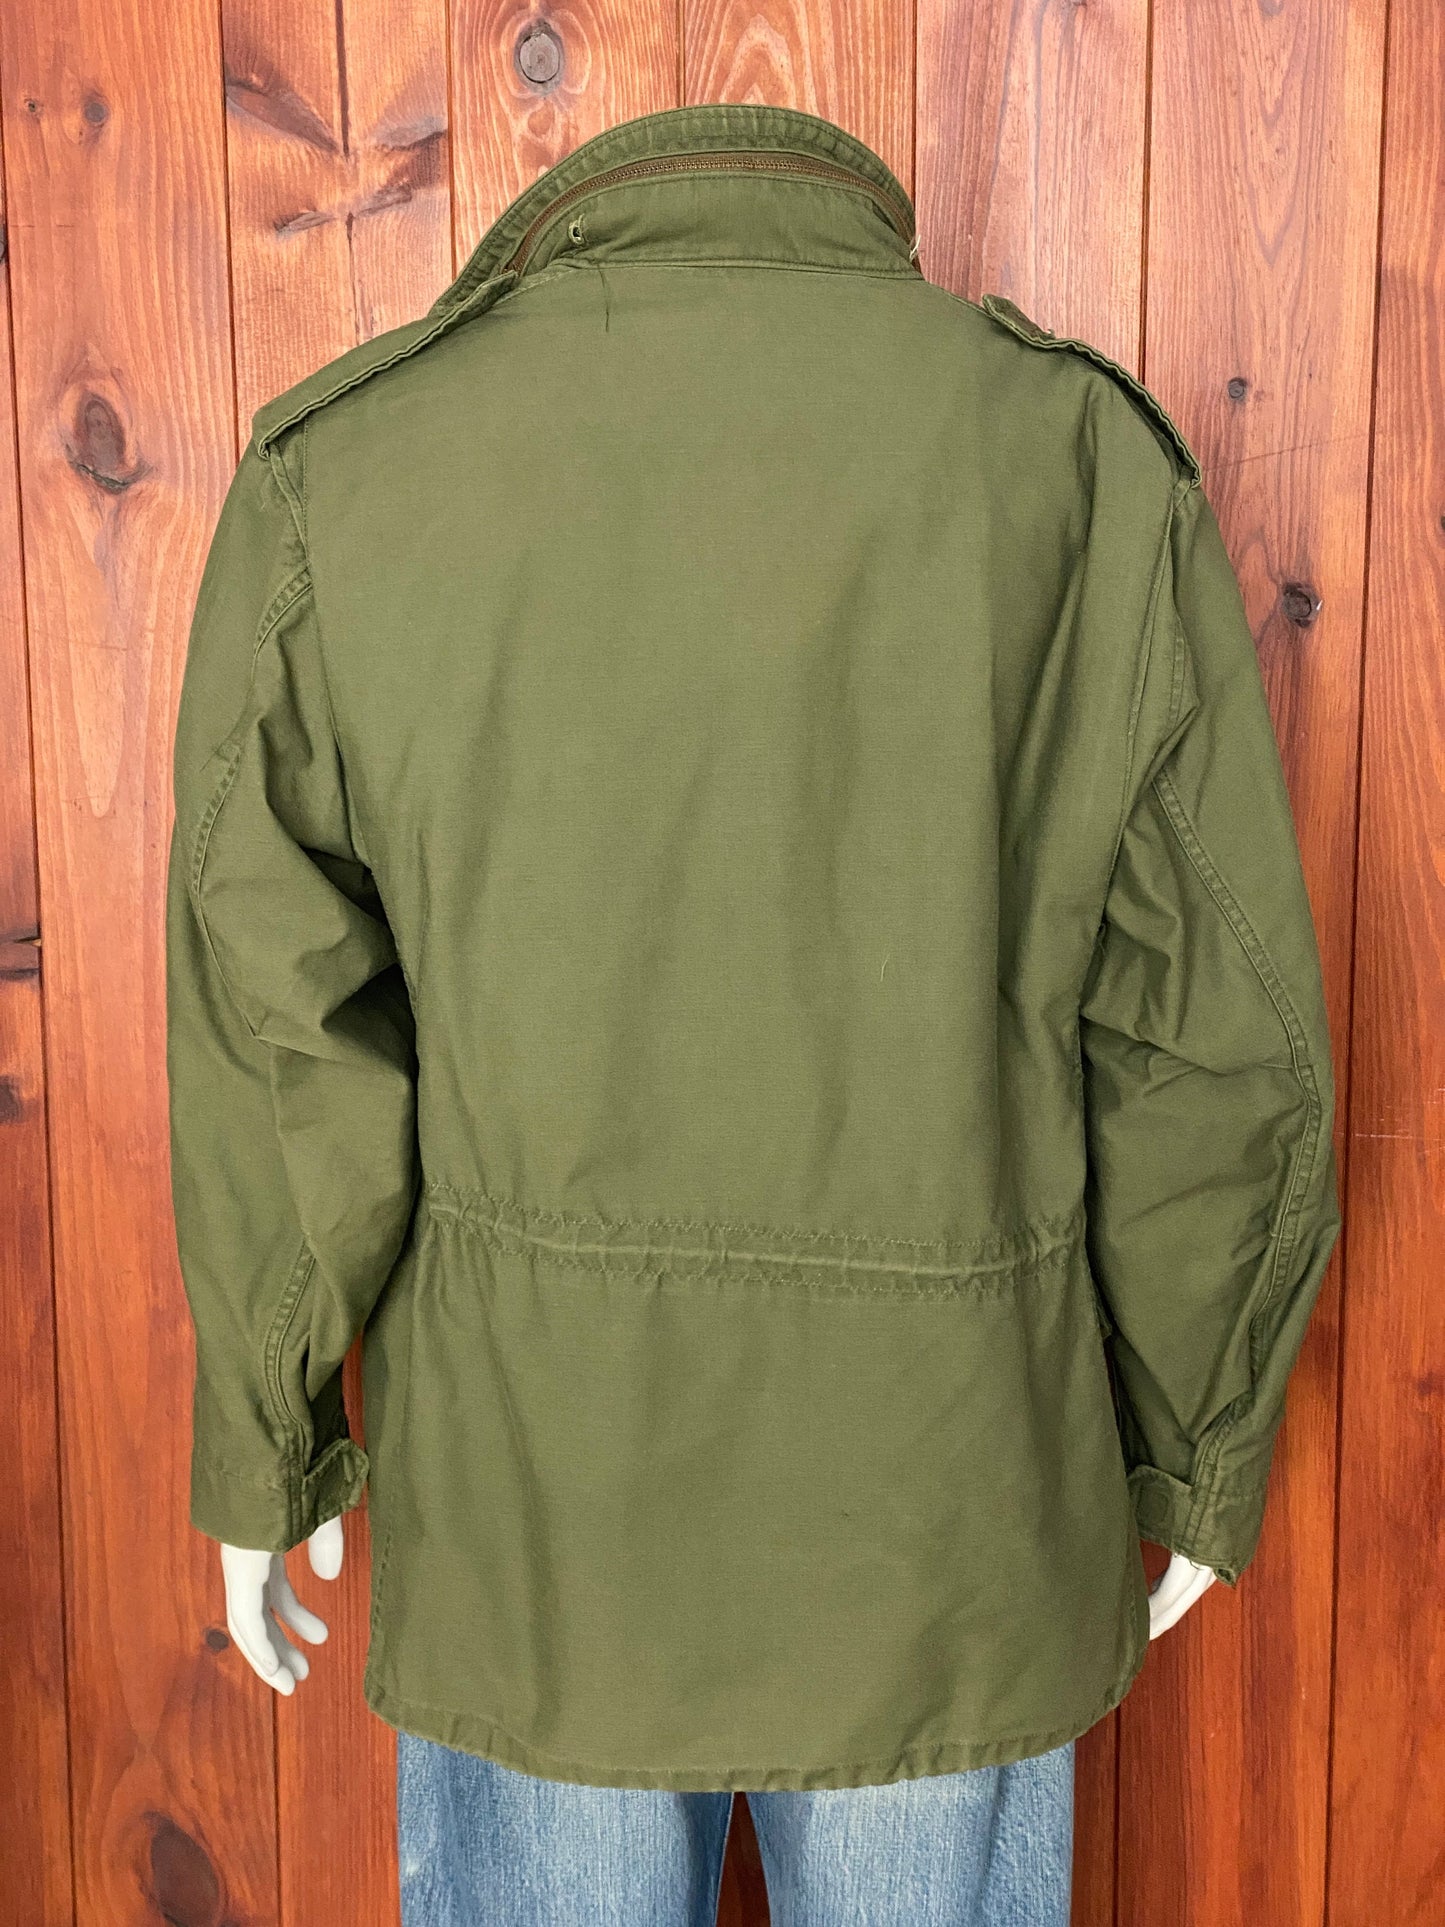 Large Reg. Authentic US Army 1970 Vietnam era Vintage M-65 field jacket